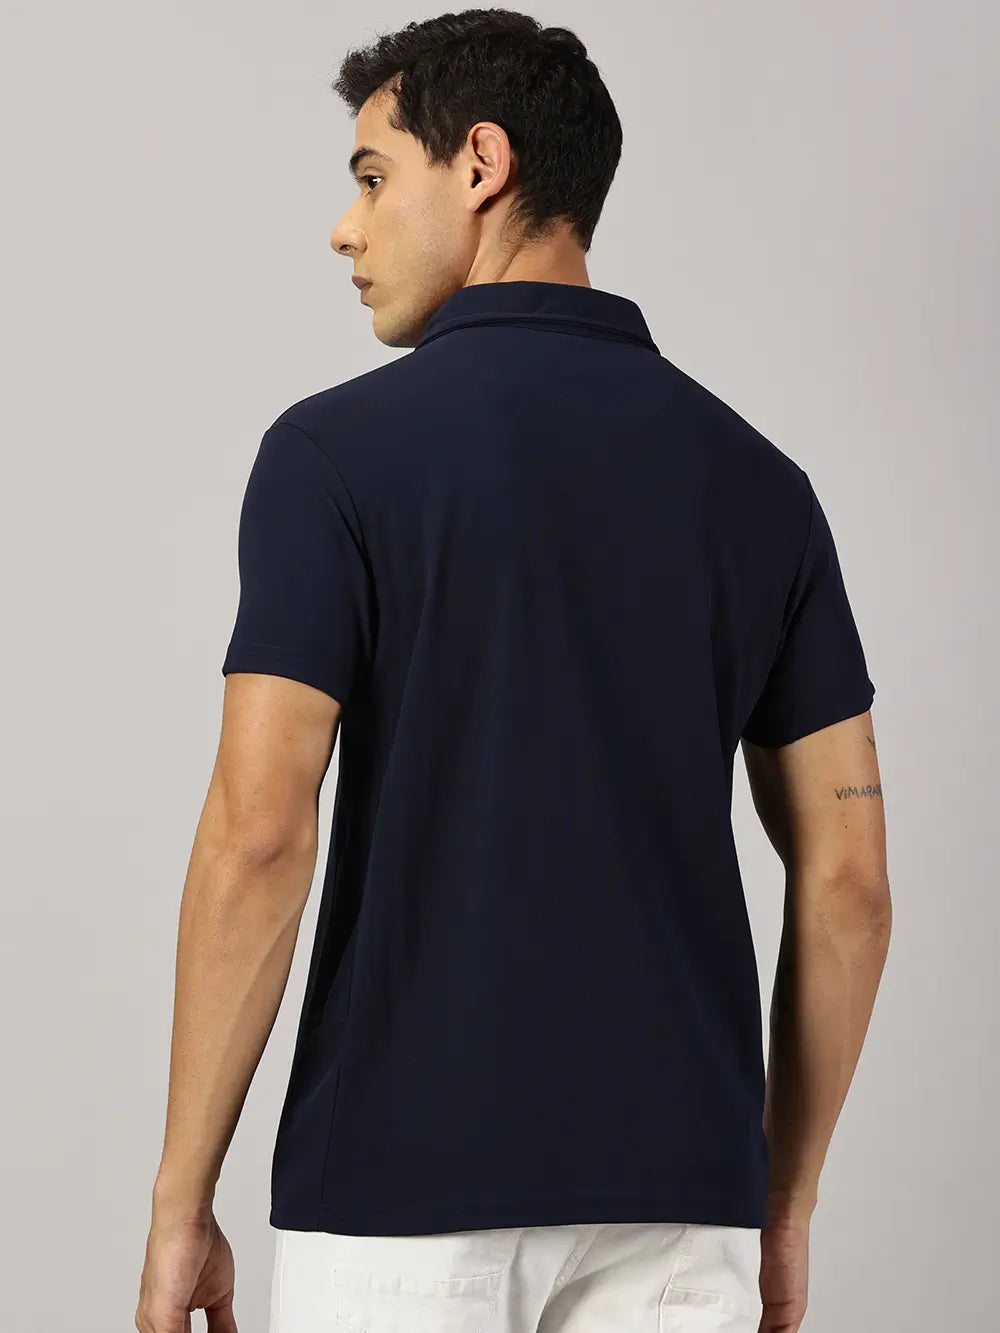 A model wearing Blue Tyga navy blue odor-free polo t-shirt